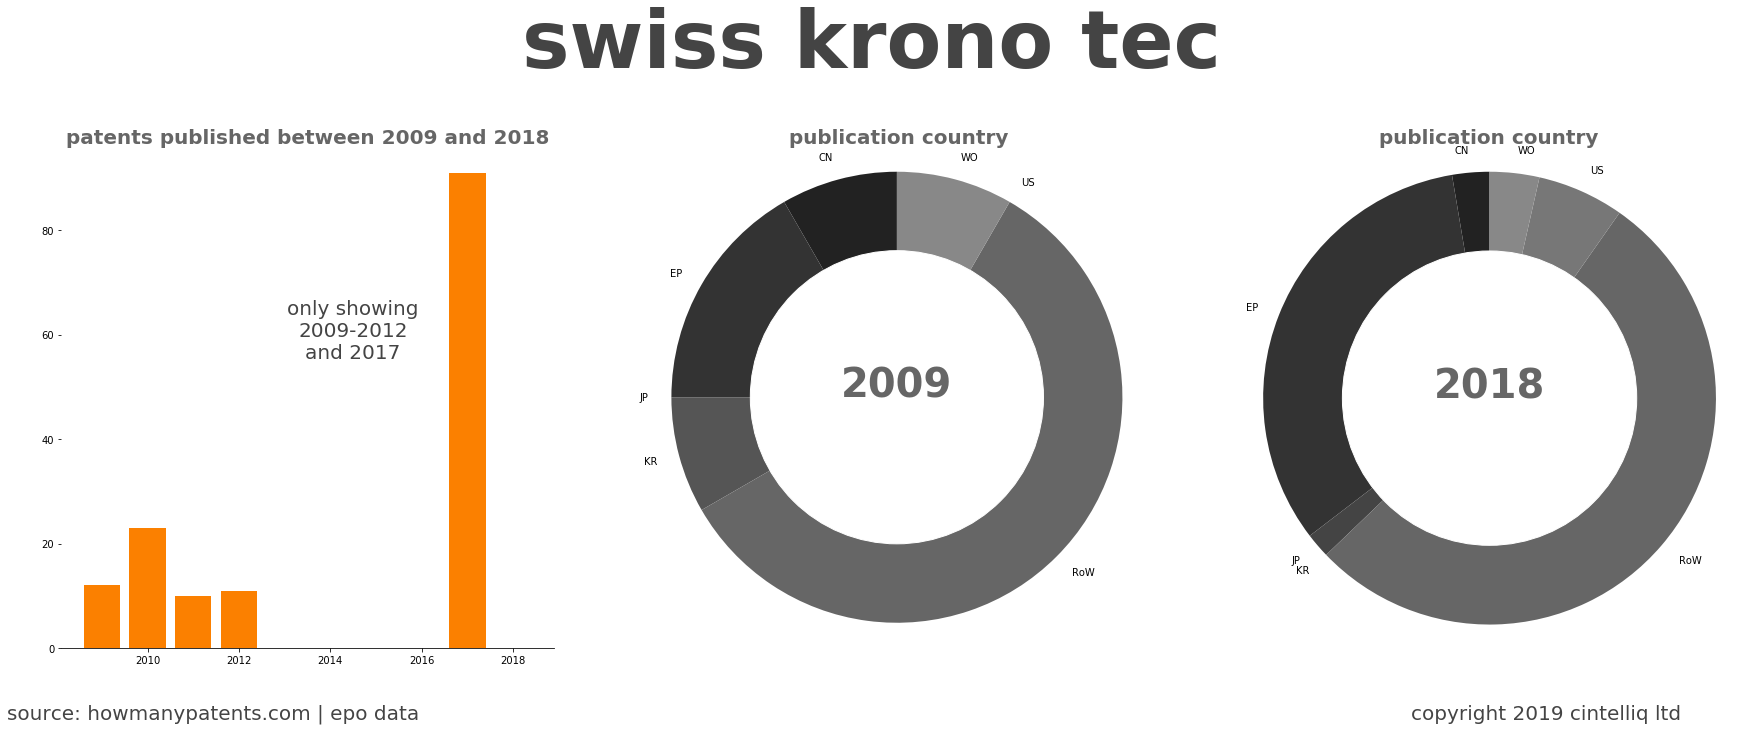 summary of patents for Swiss Krono Tec